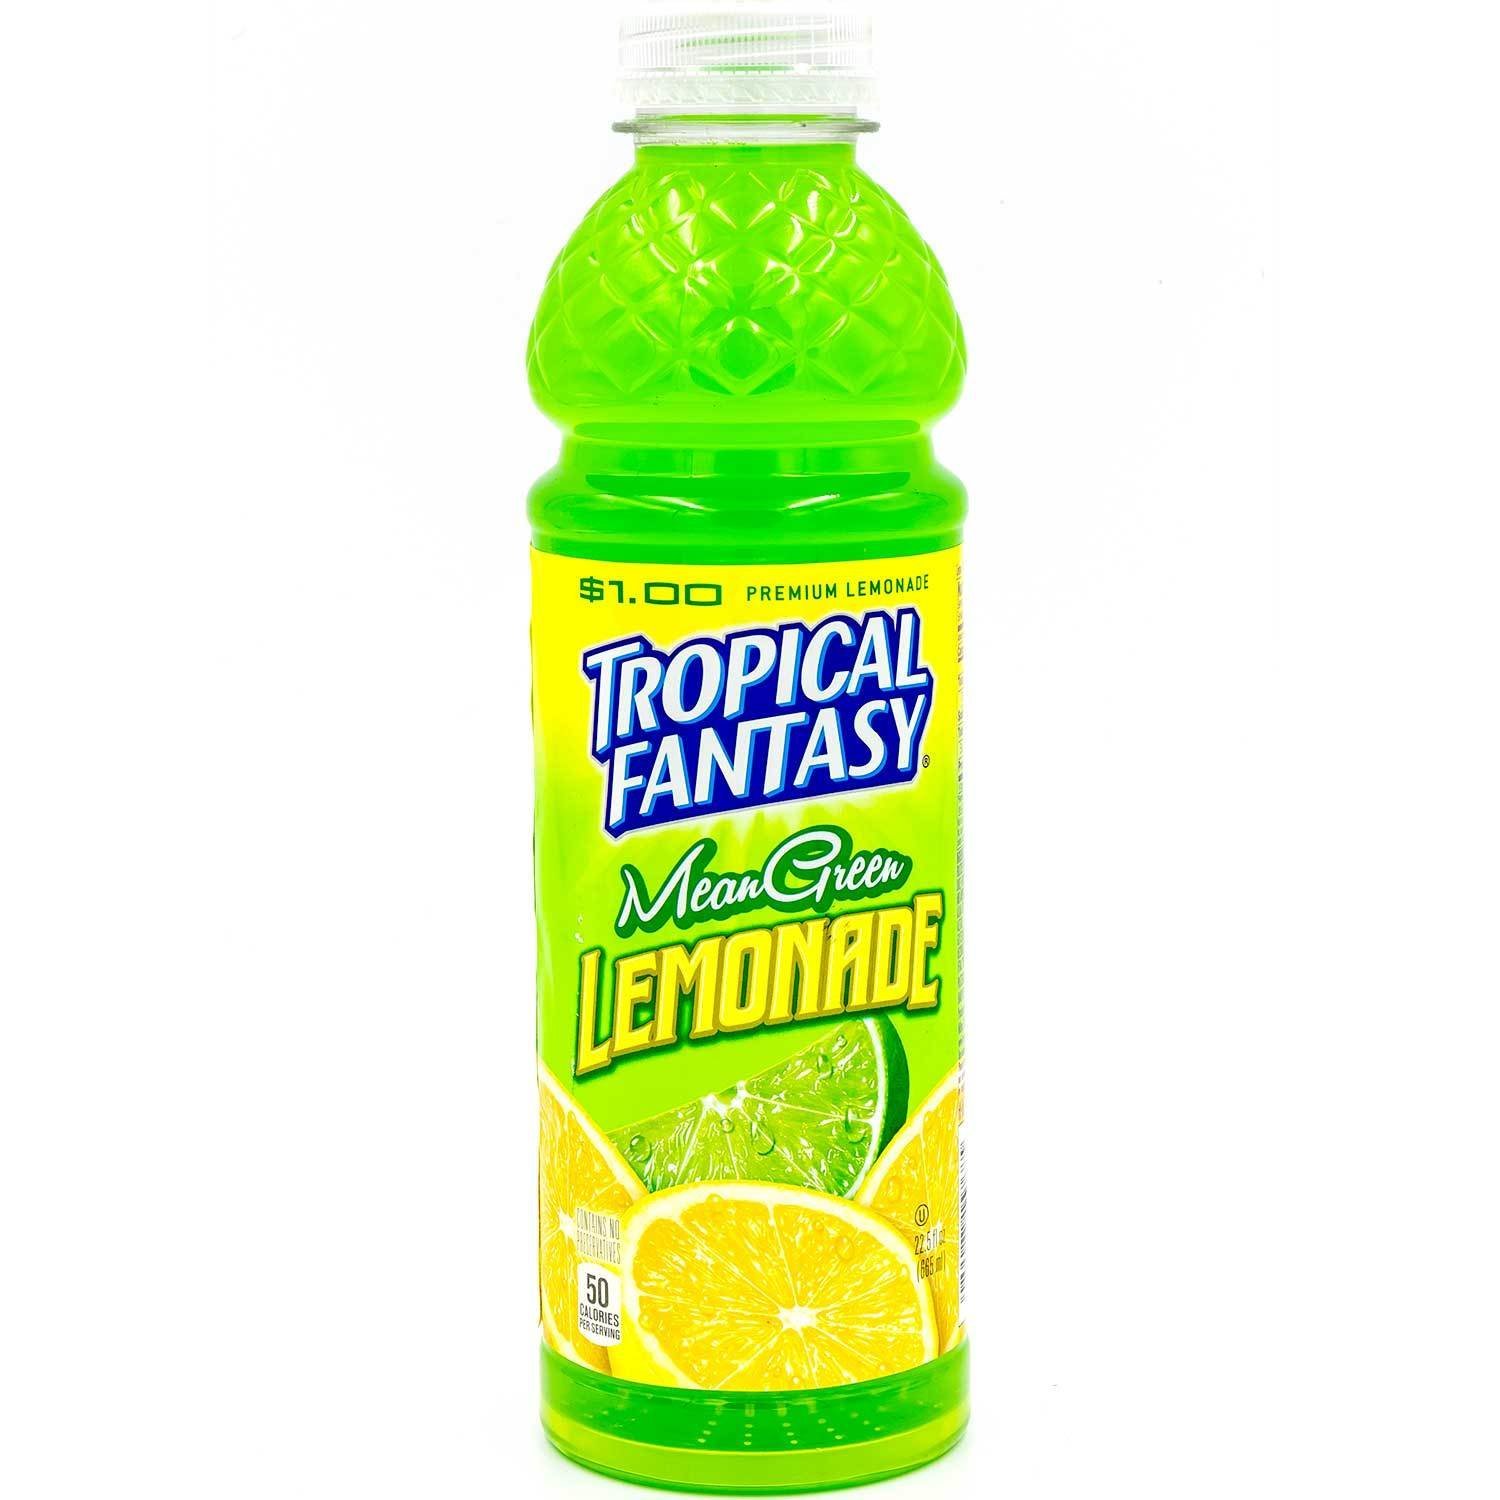 Tropical Fantasy Mean Green Lemonade 24/24 oz